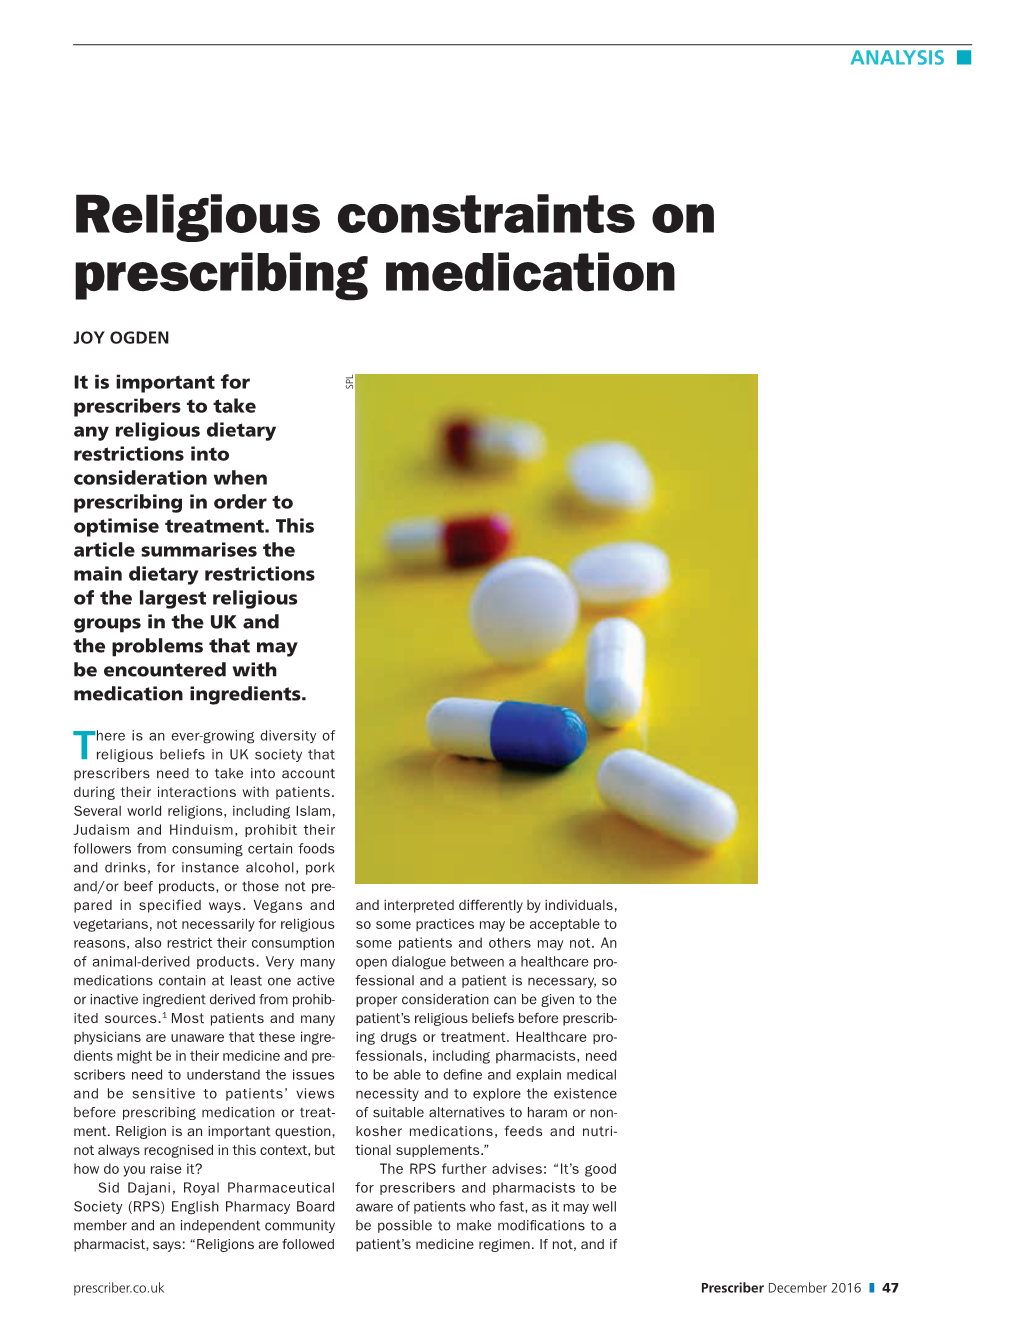 Religious Constraints on Prescribing Medication